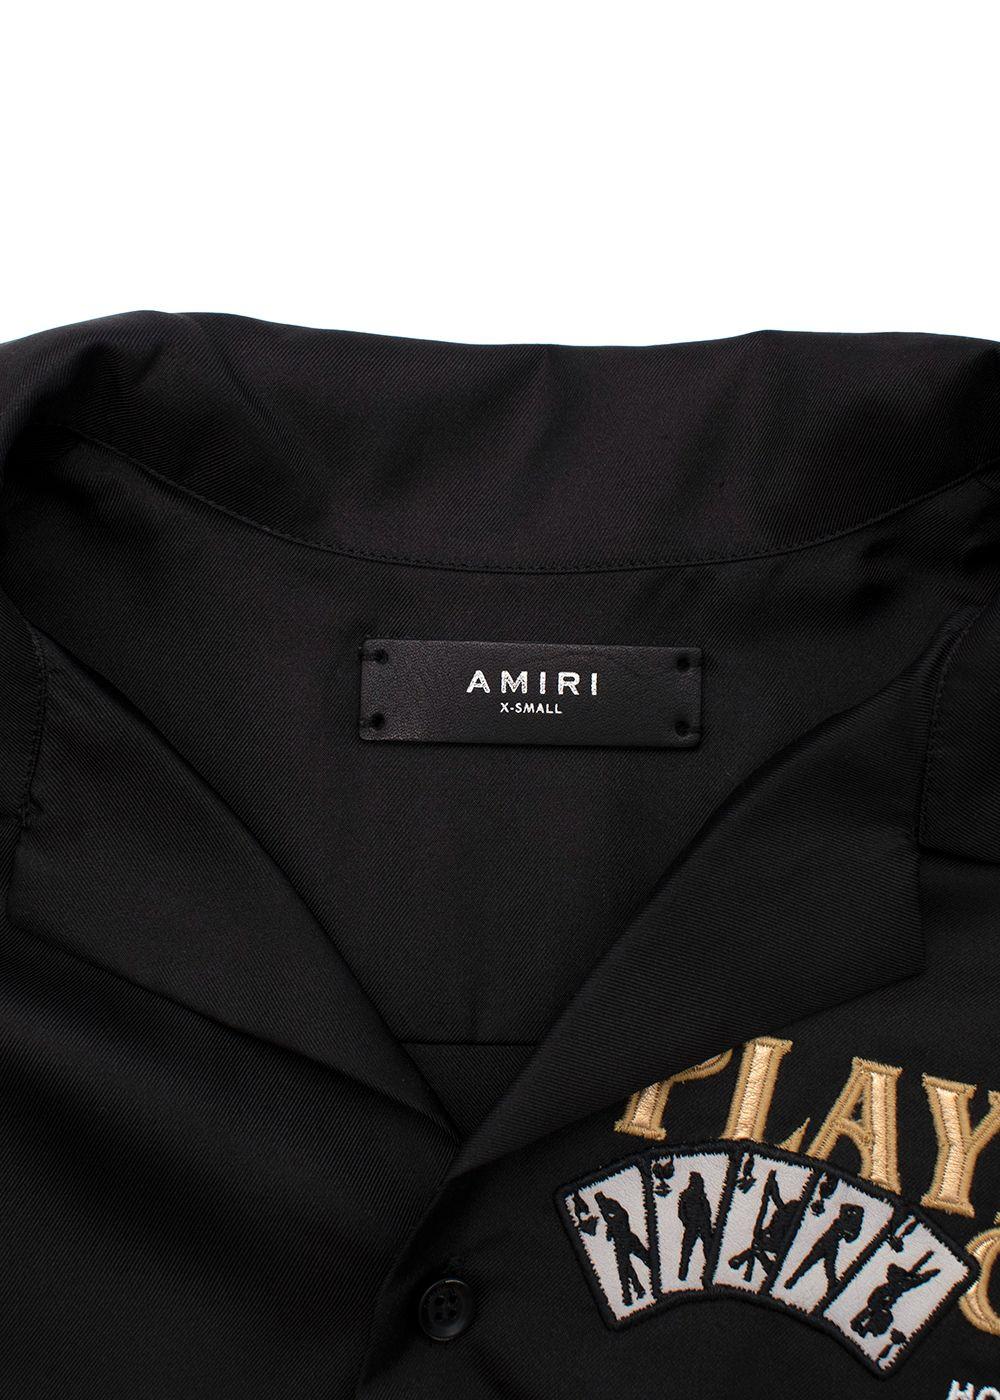 Women's or Men's Amiri Black Silk Players Club Shirt - Size XS For Sale